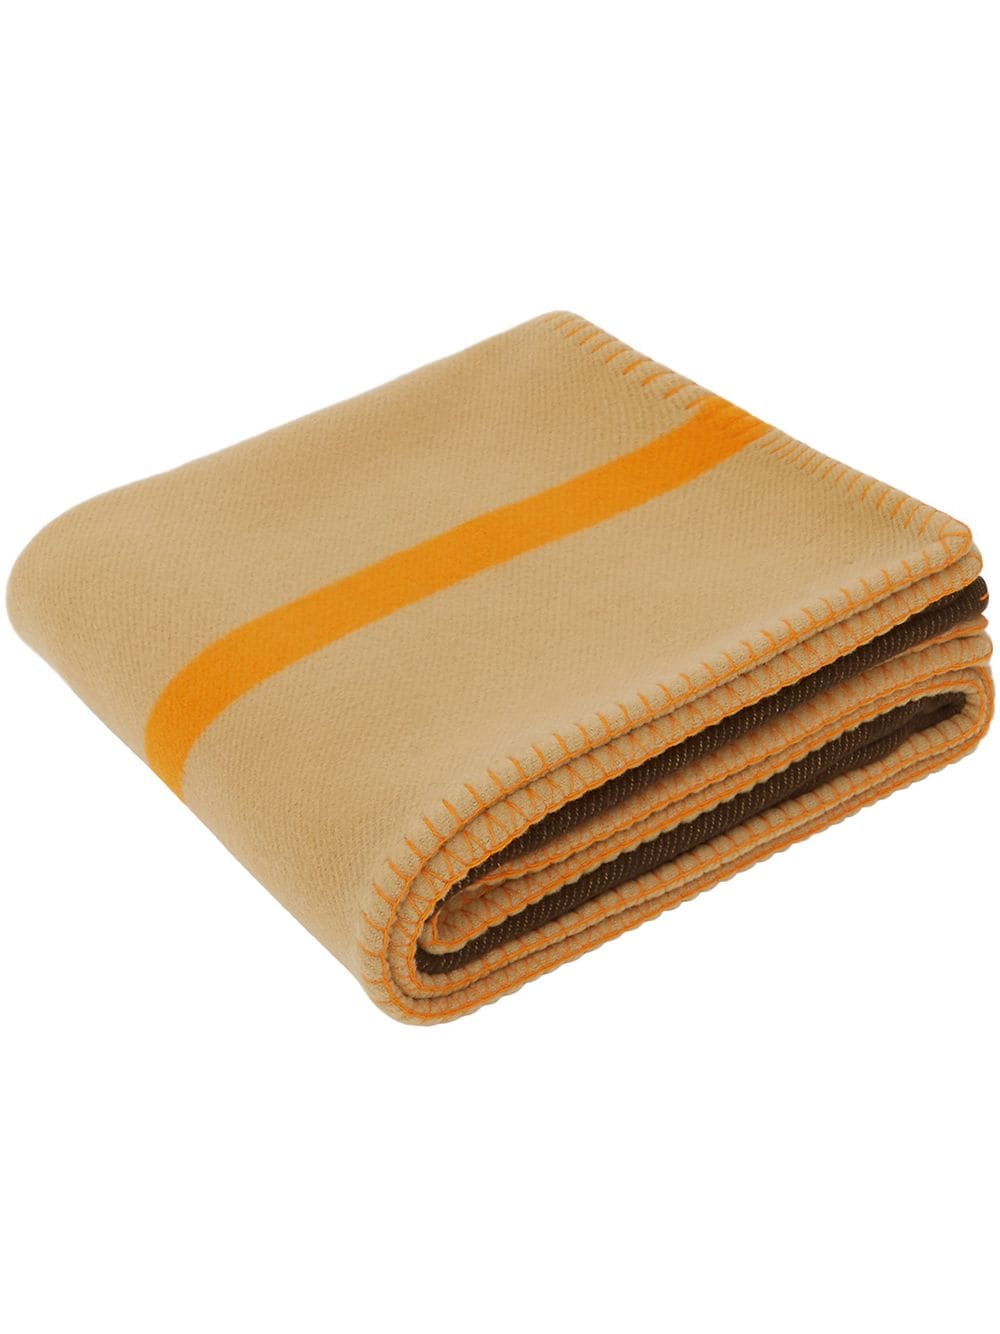 Burberry - Icon stripe merino wool cashmere blanket